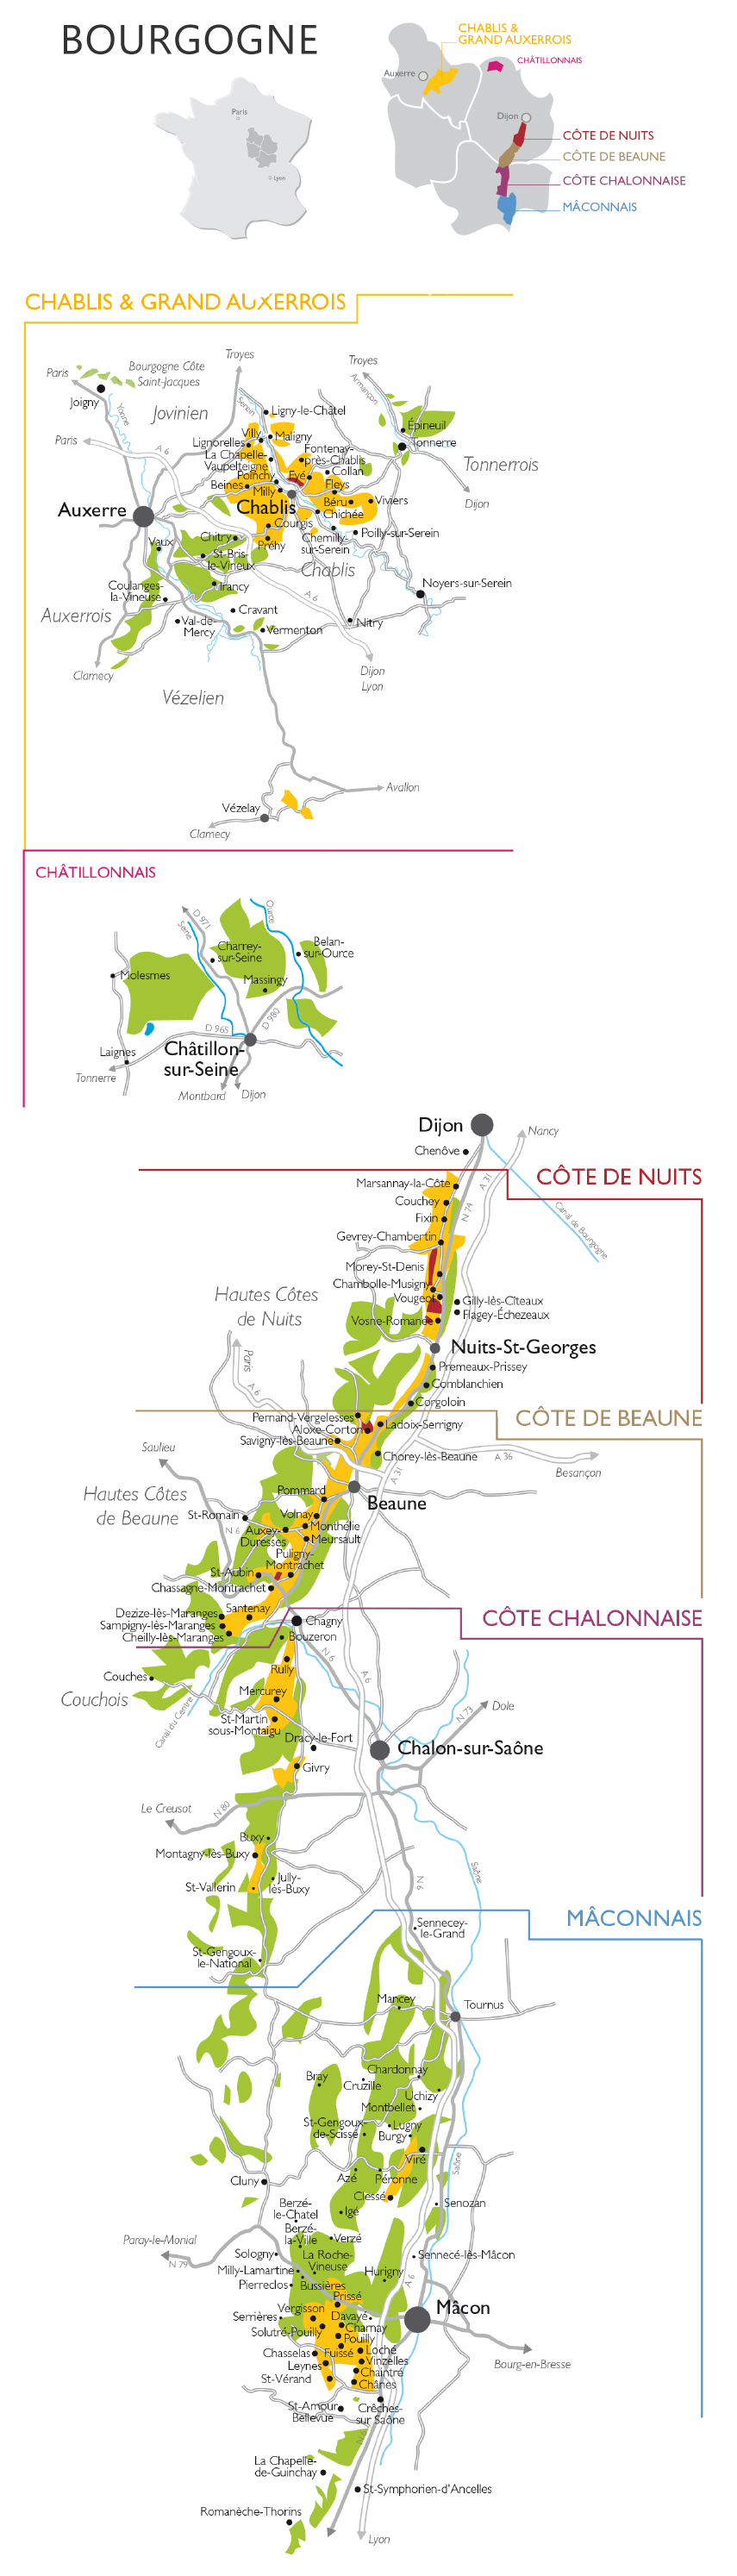 Mapa vinícola da Bourgogne